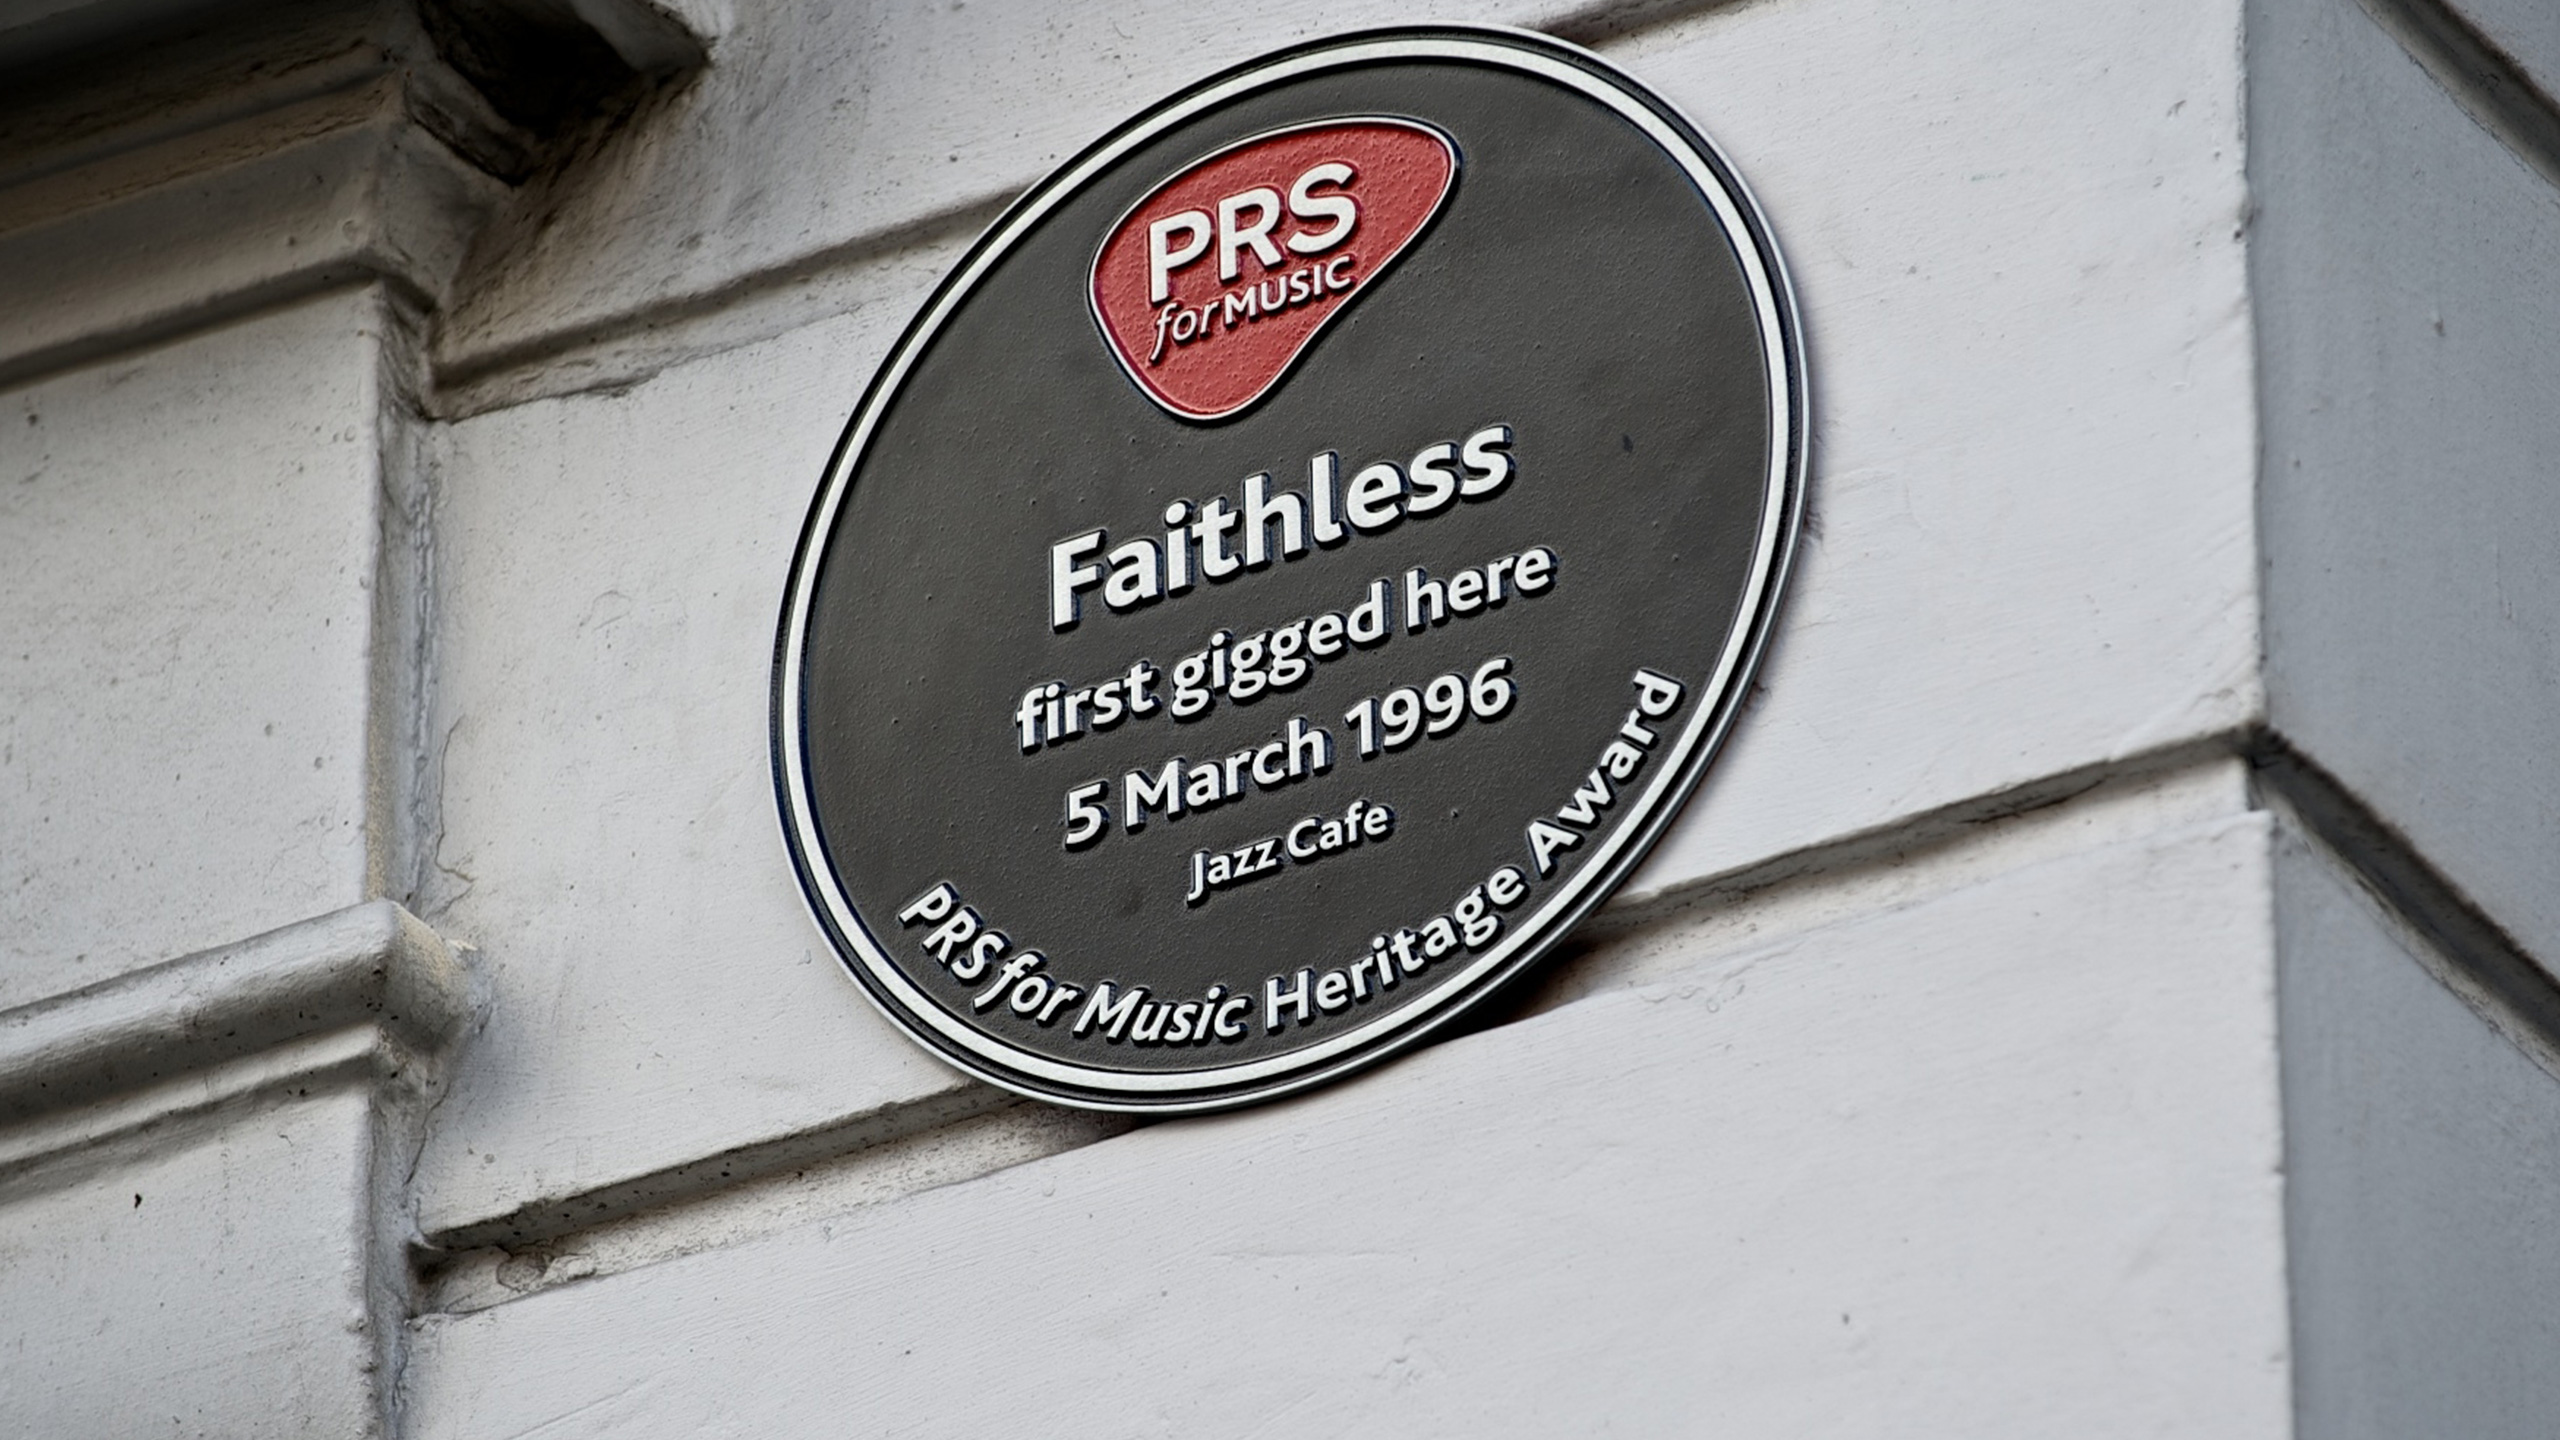 The Jazz Cafe Heritage Award for Faithless' first gig